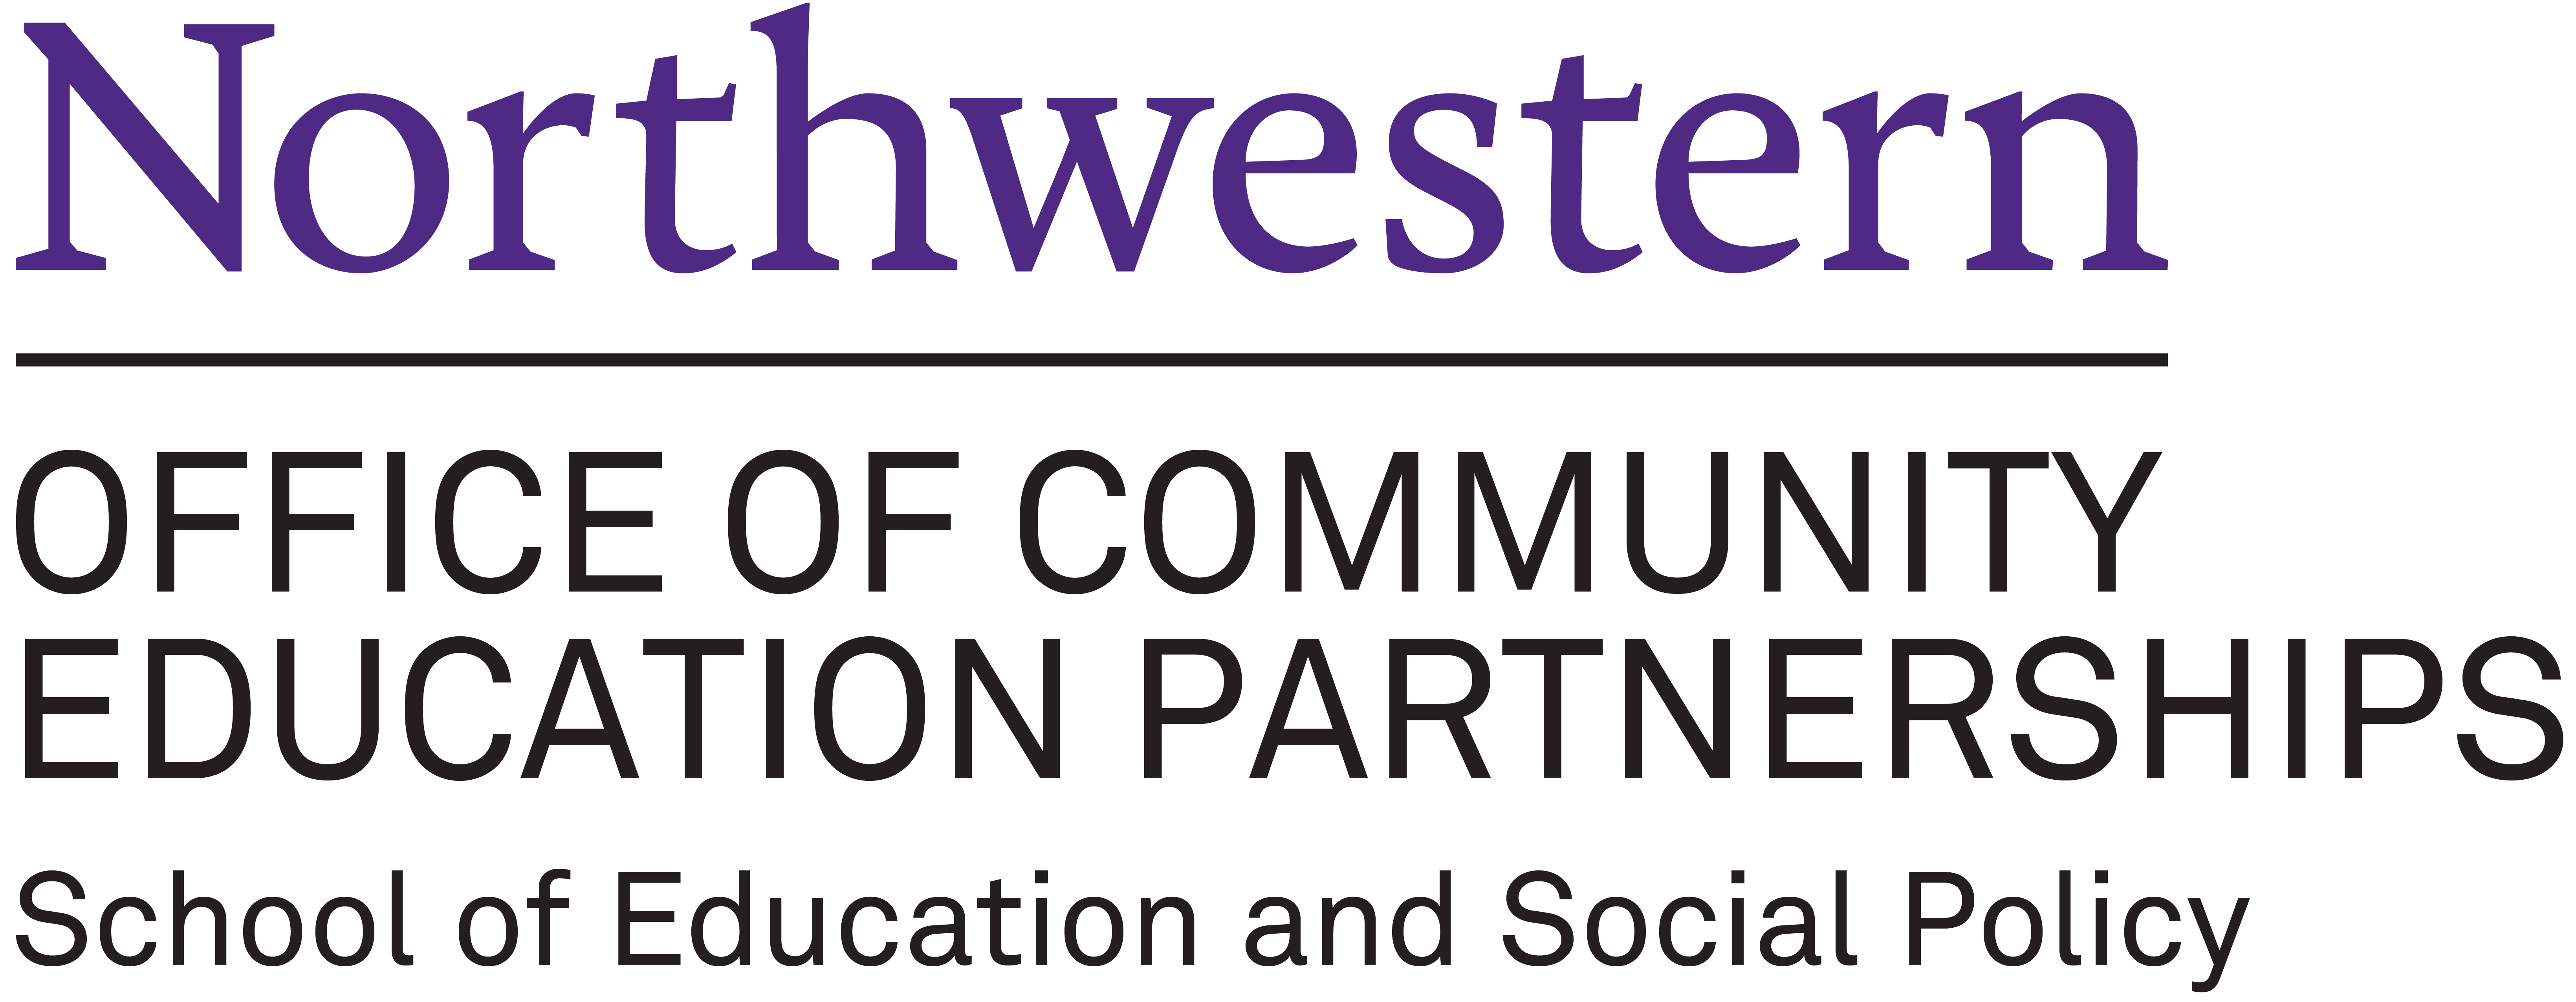 Office of Community Education Partnerships